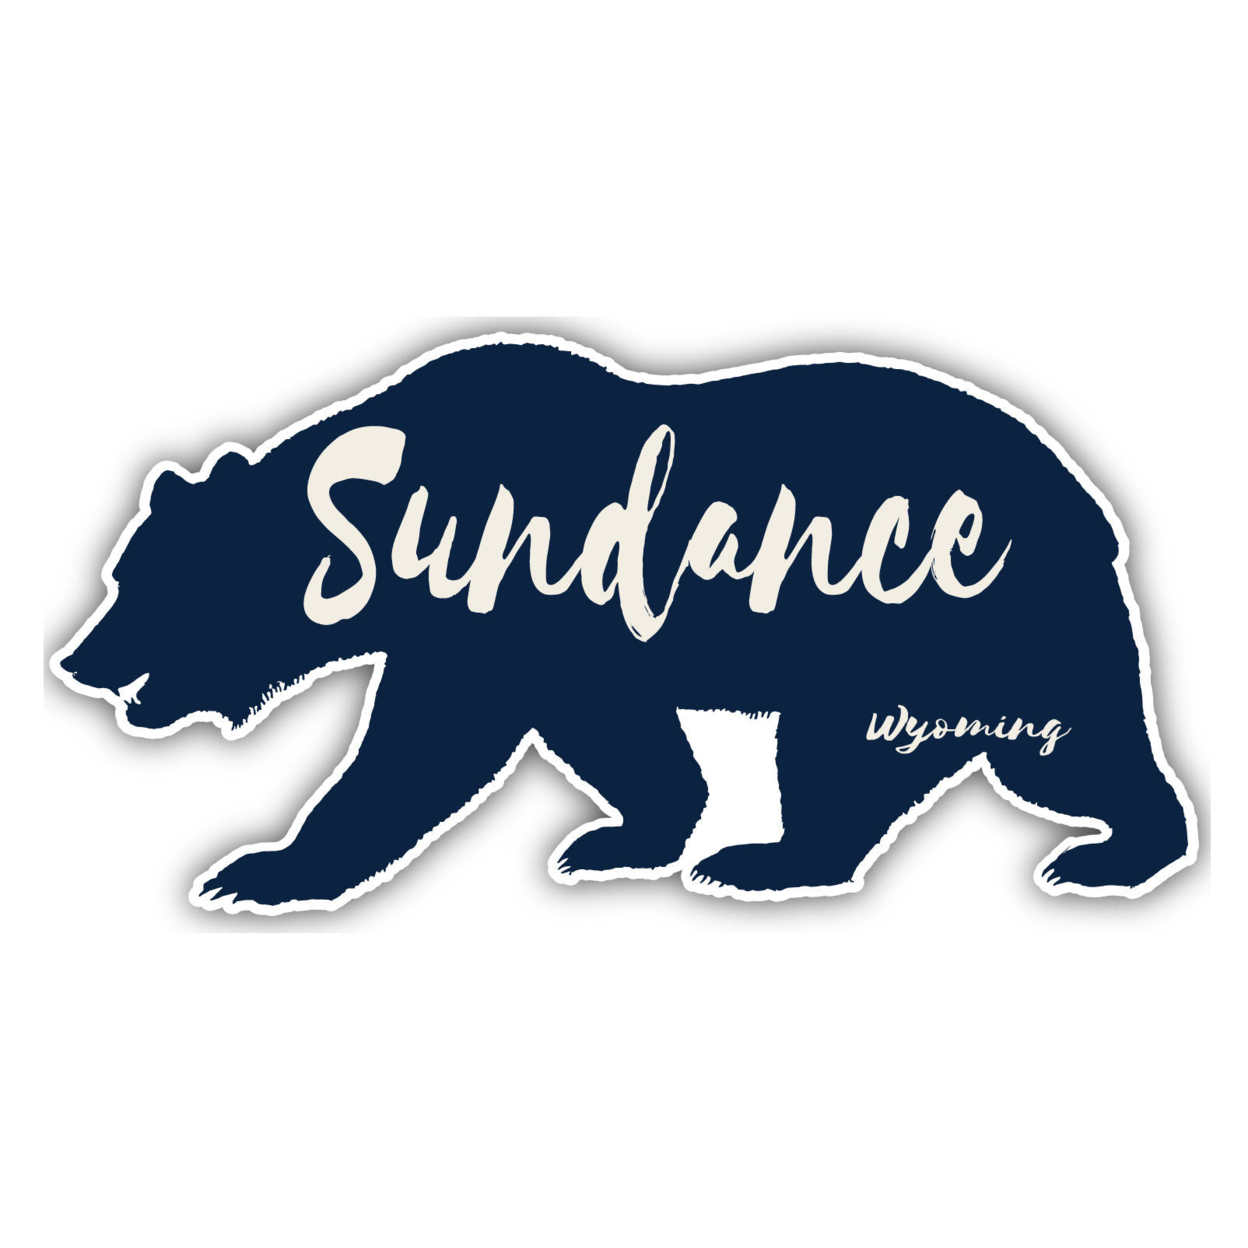 Sundance Wyoming Souvenir Decorative Stickers (Choose Theme And Size) - Single Unit, 2-Inch, Bear